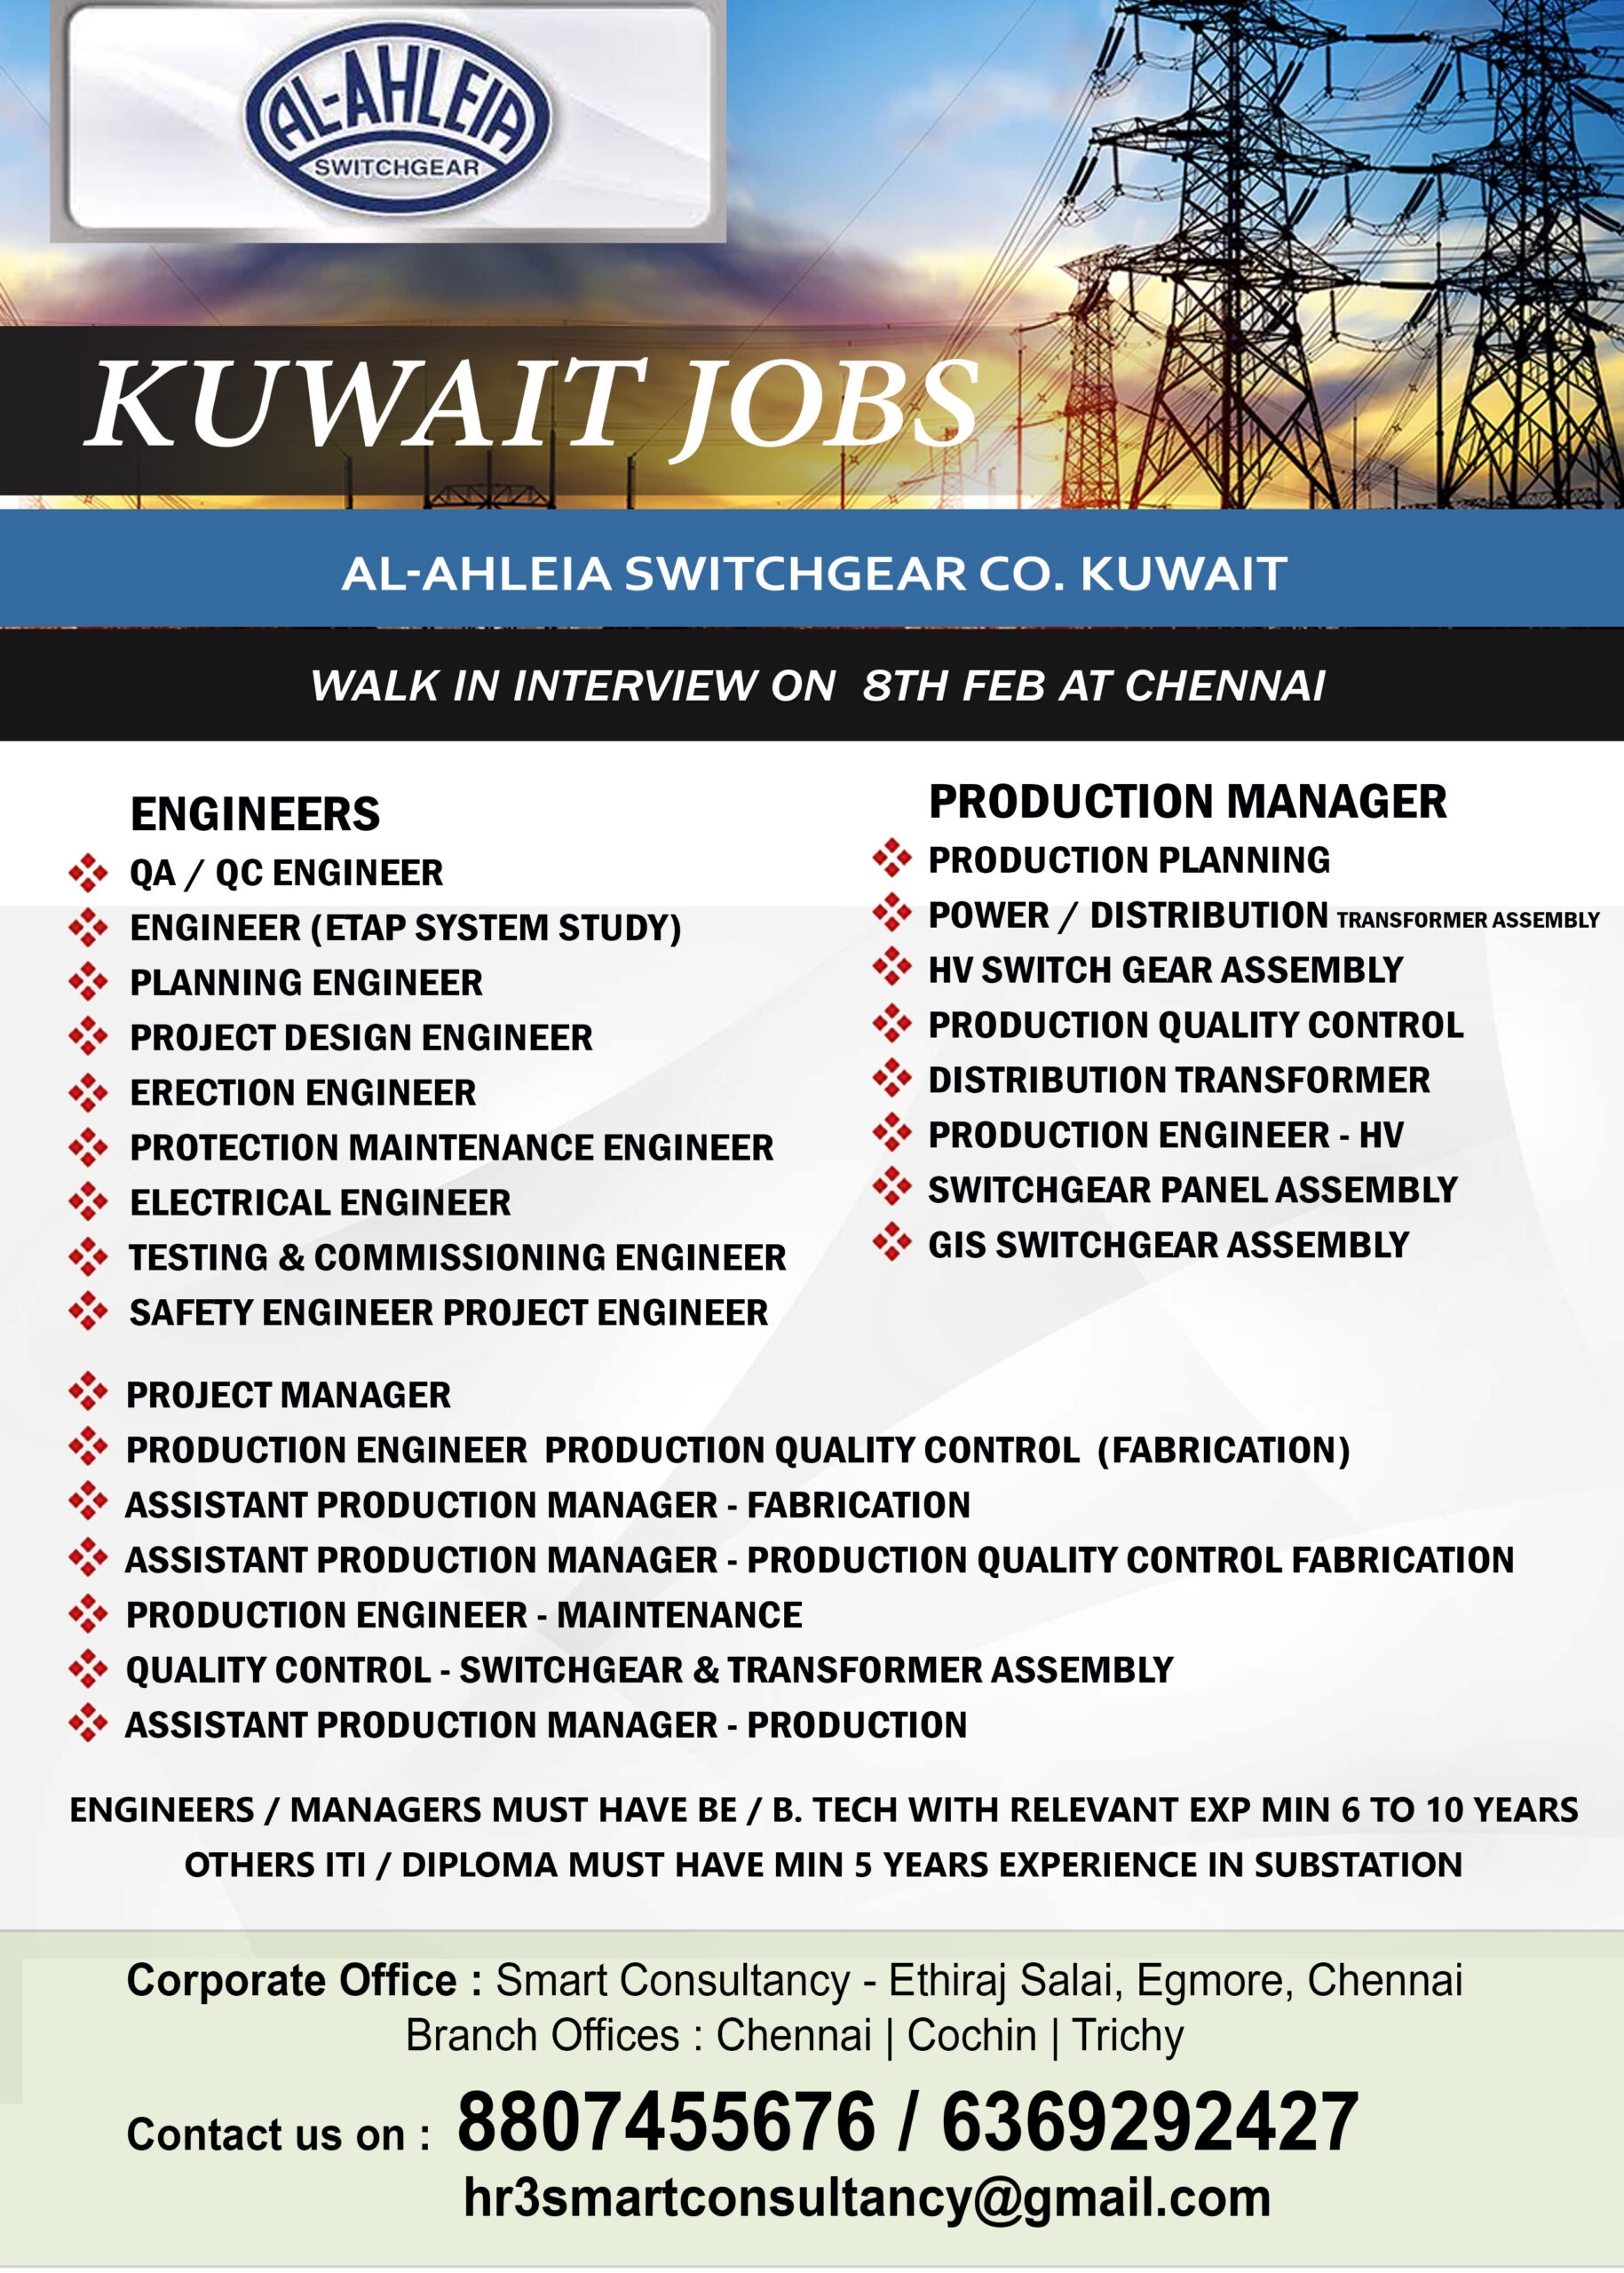 Al-Ahleia Switchgear Co. Kuwait WALK IN INTERVIEW ON 8TH FEB AT CHENNAI